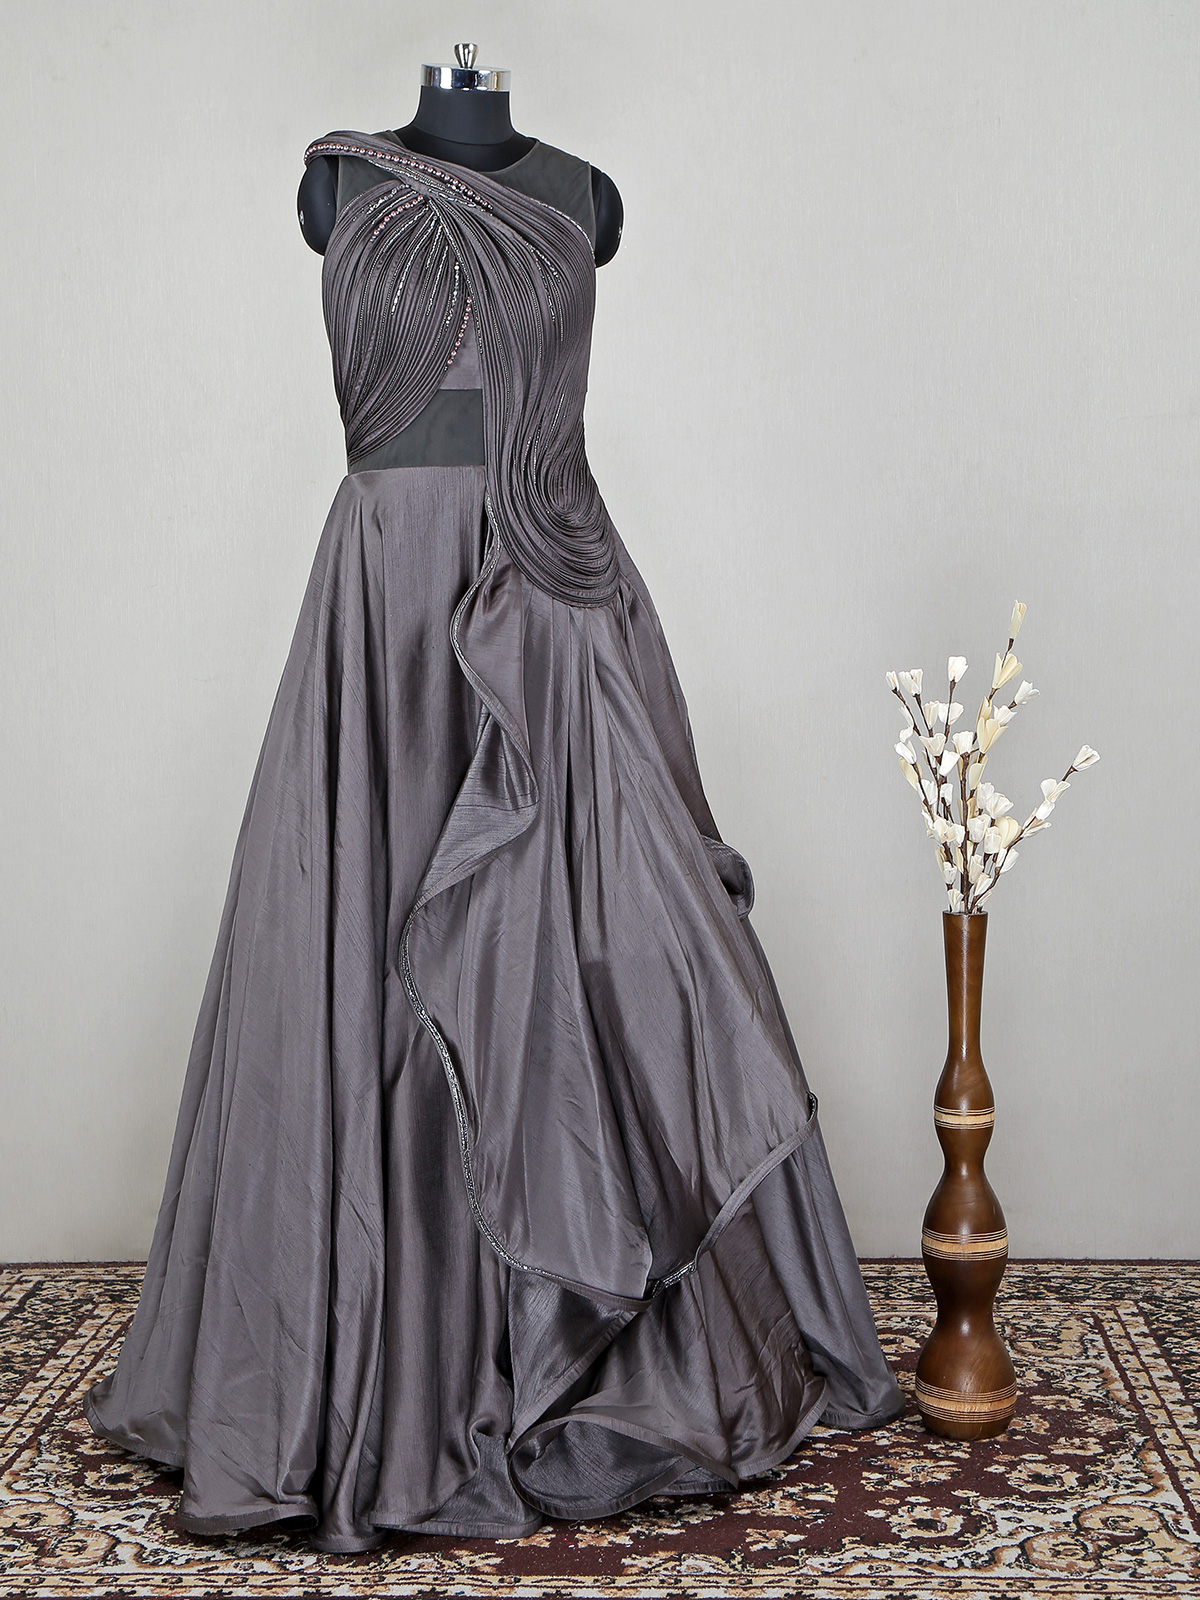 Raw Silk Latest Dress Designs for girls | #2021 Stylish | - YouTube